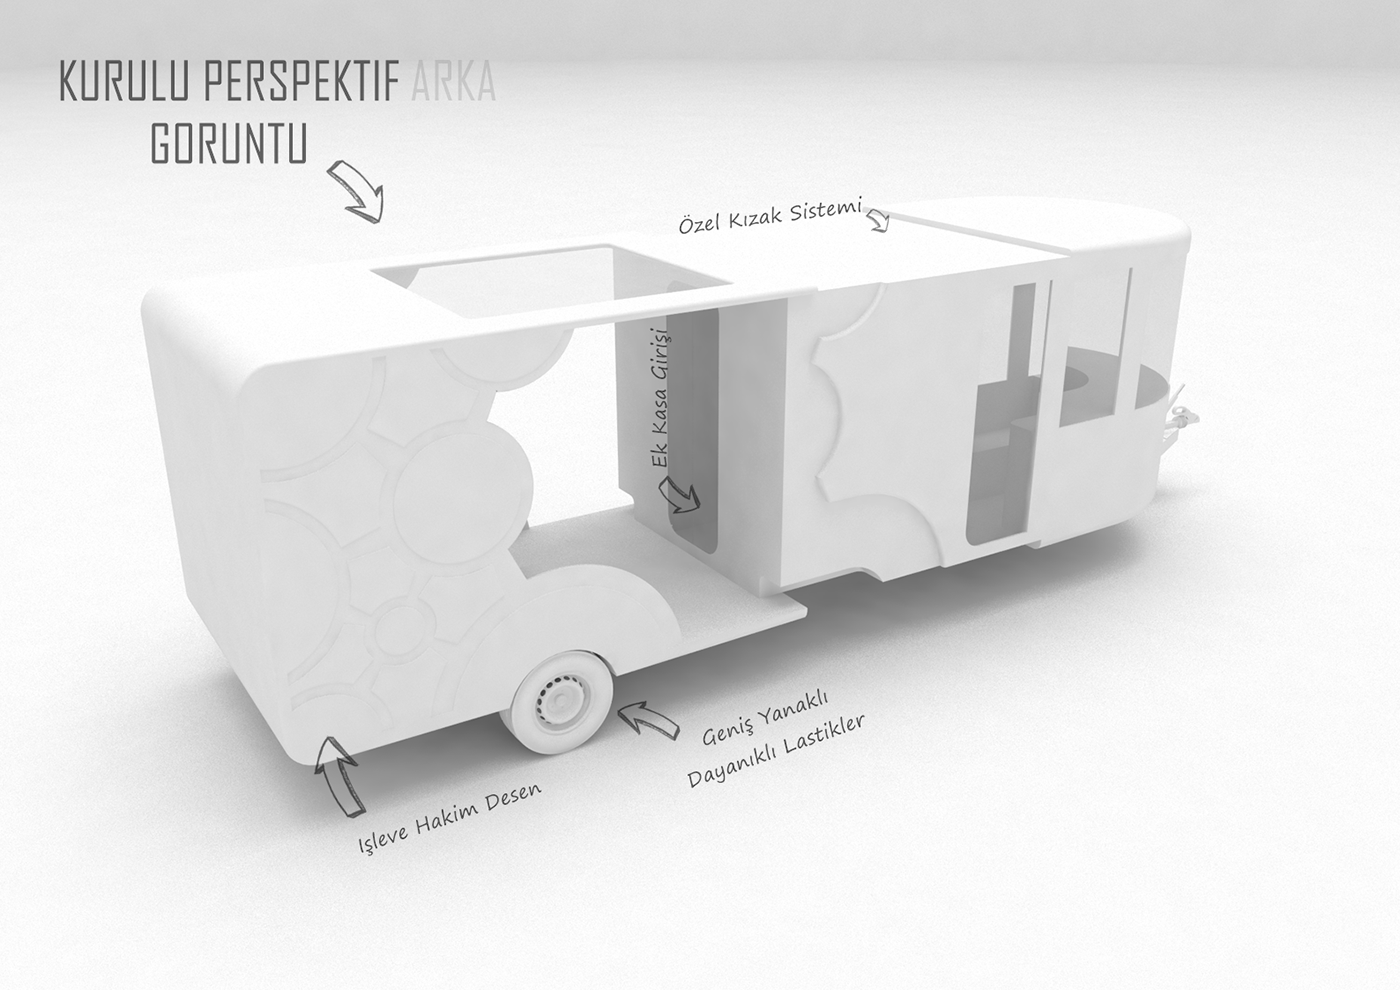 caravan lab bio Draft finalproject design product Interior